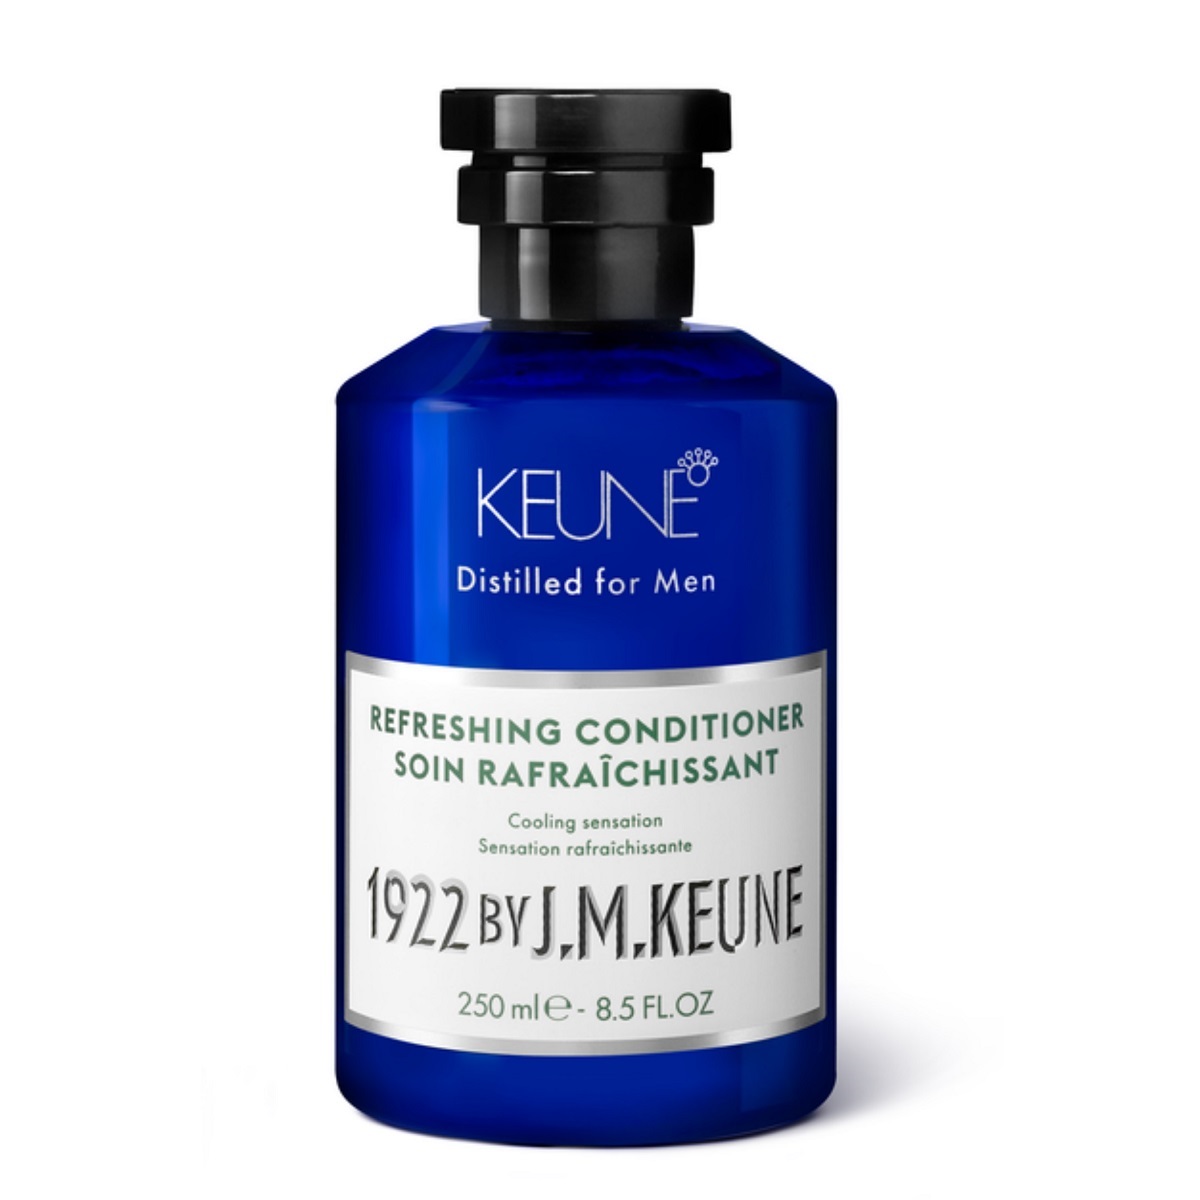 цена Keune Освежающий кондиционер Refreshing Conditioner, 250 мл (Keune, 1922 by J.M. Keune)